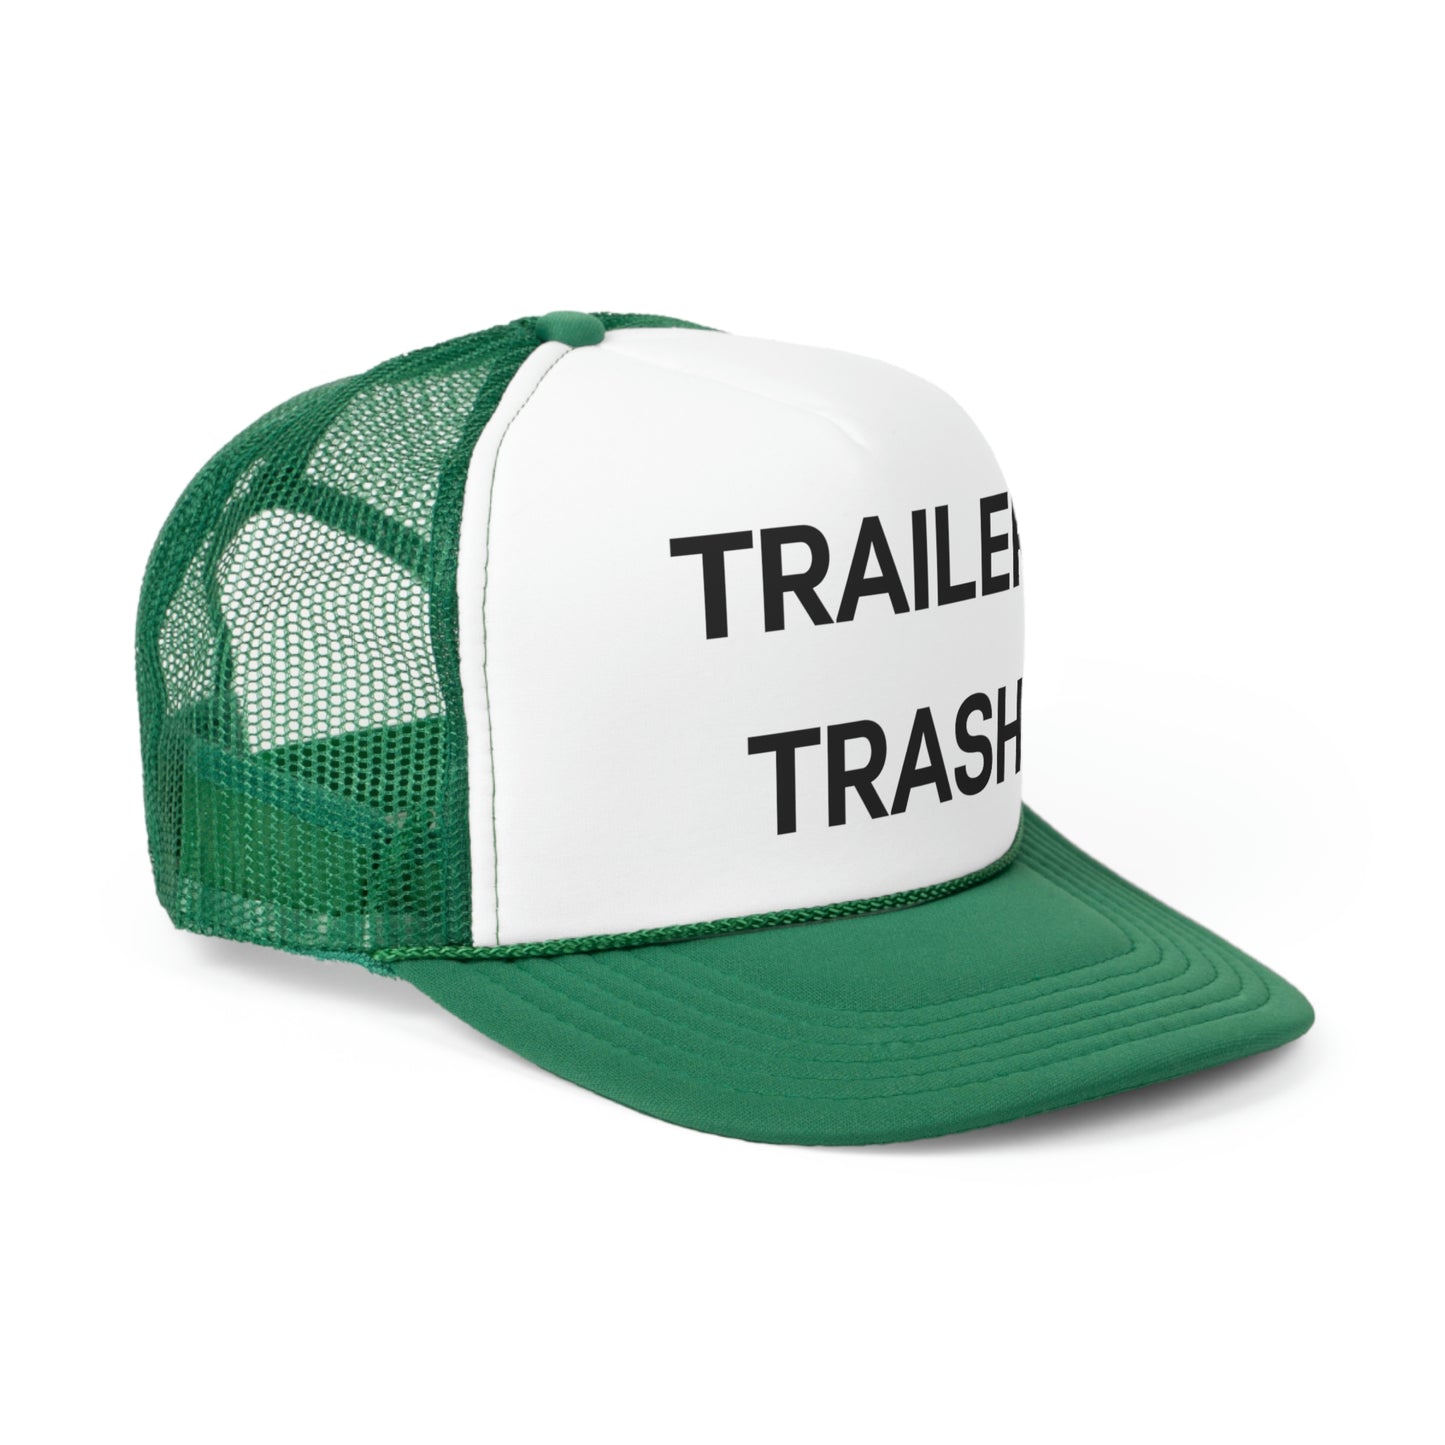 Trailer Trash